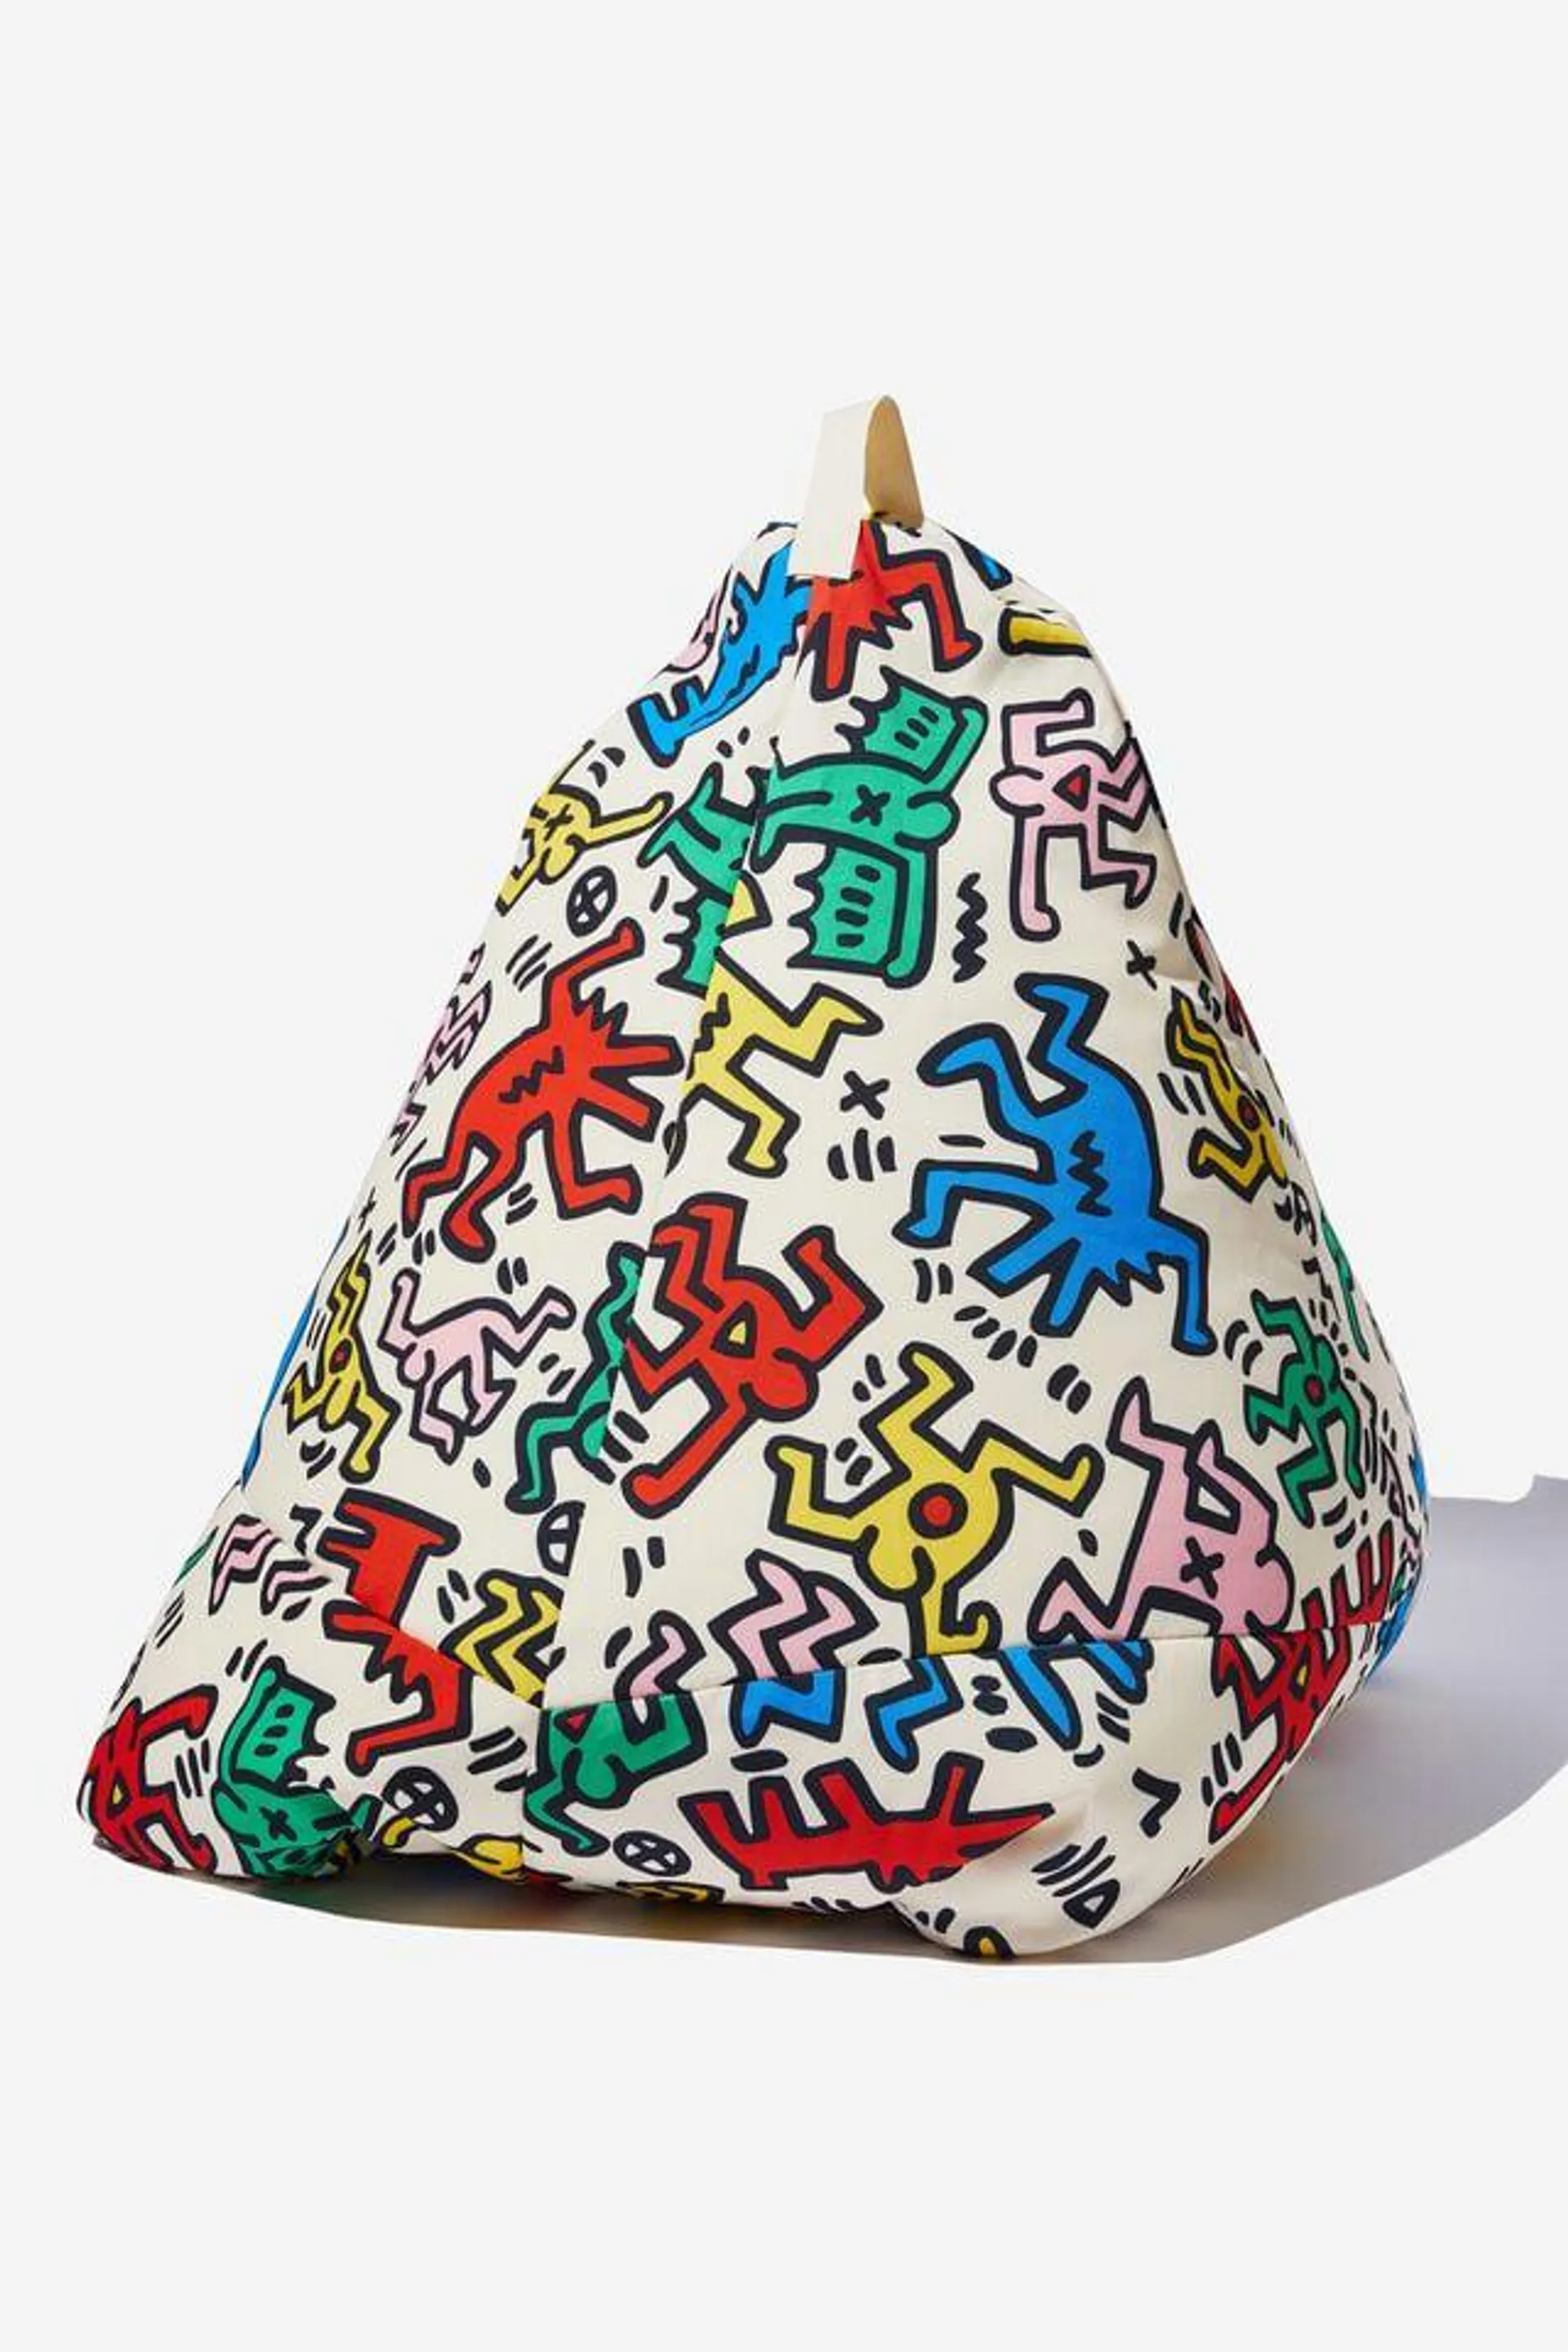 Keith Haring Bean Bag Cover